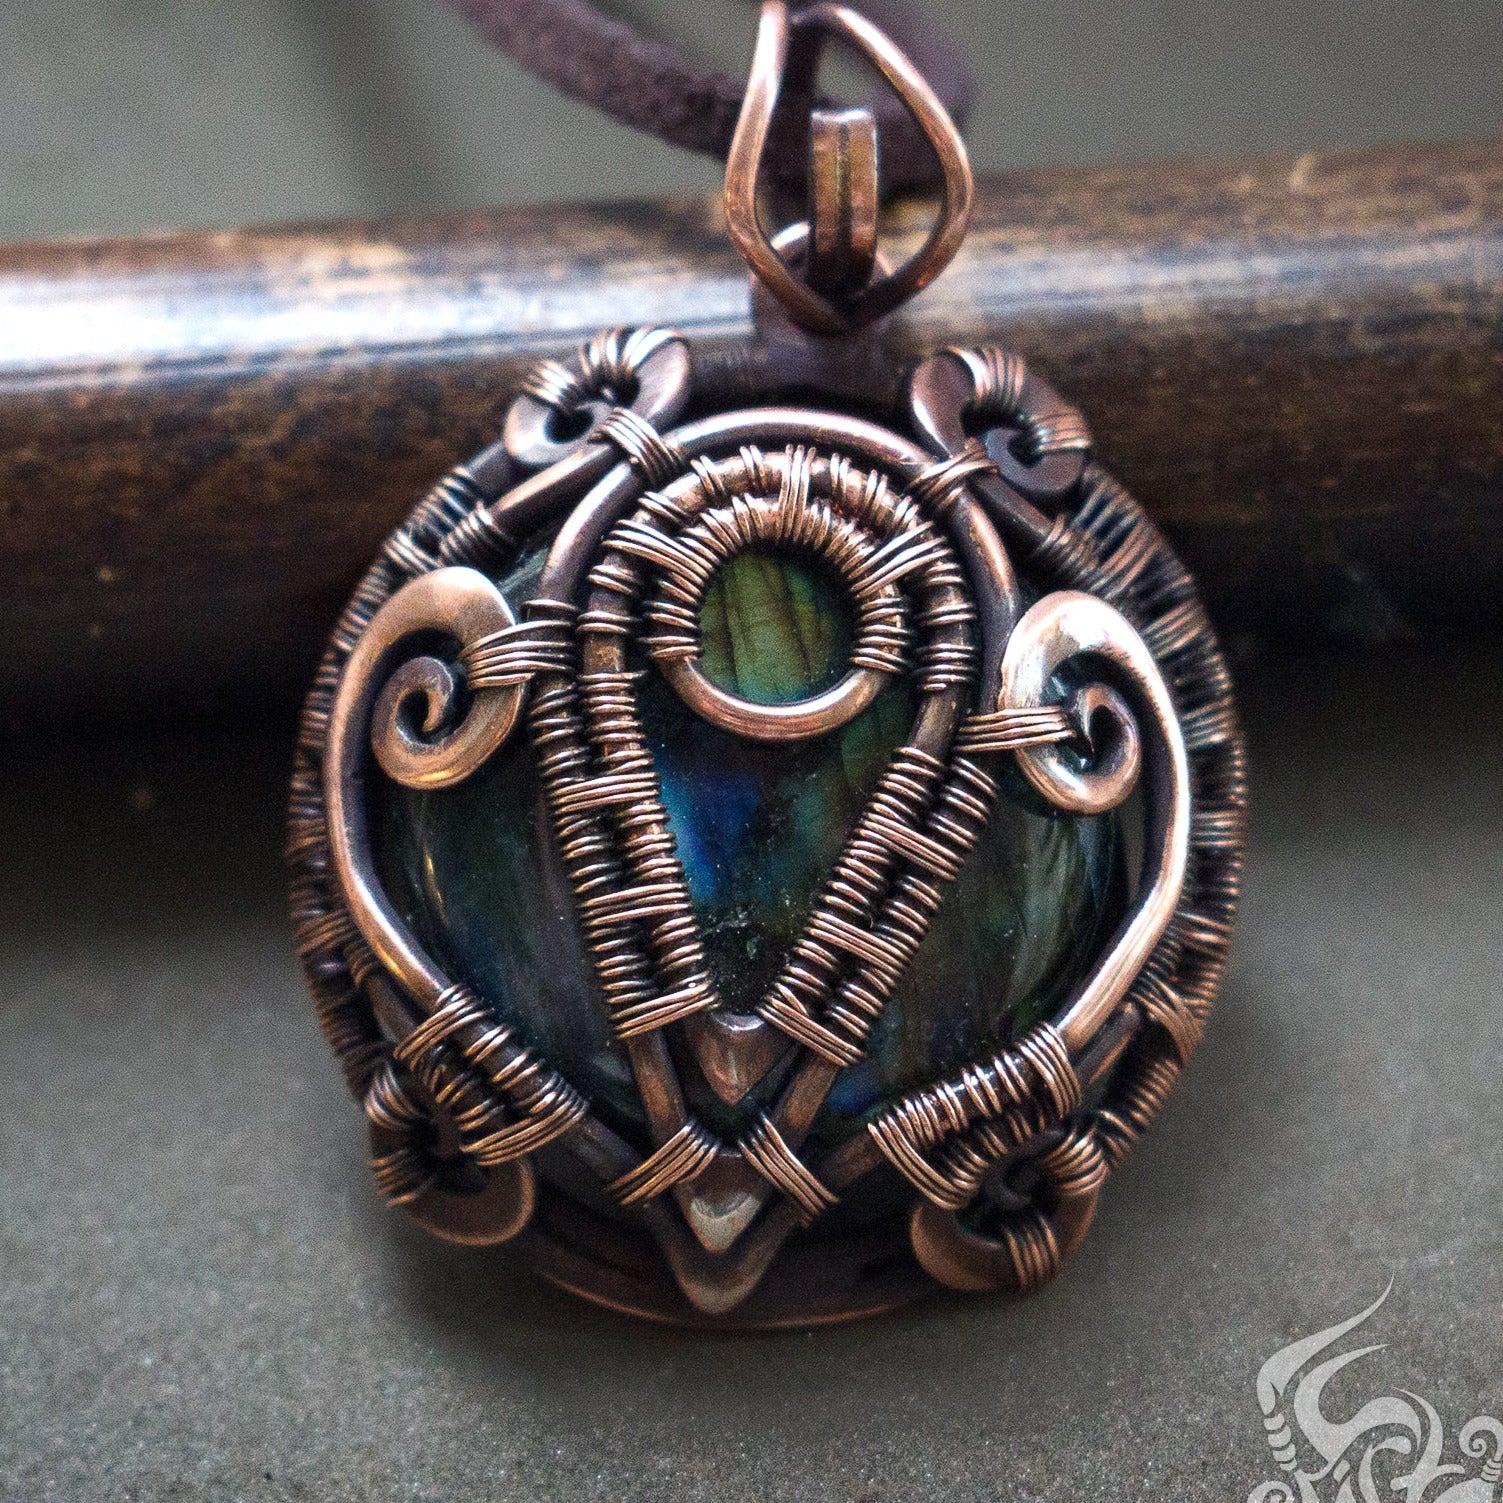 Round victorian steampunk handmade necklace with labradorite stone pic 1